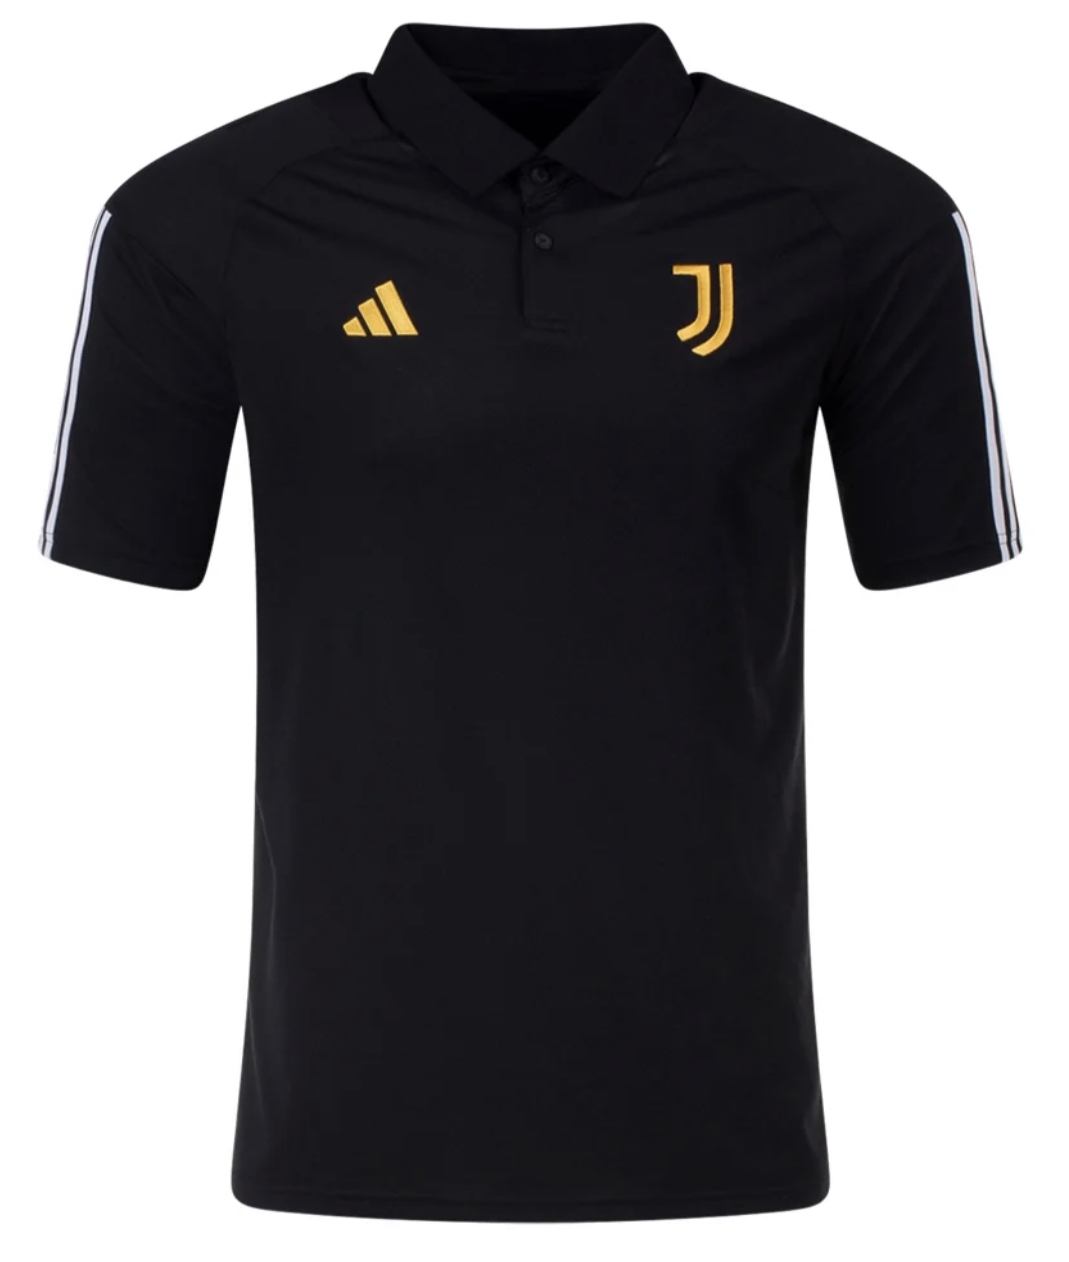 Adidas Juventus 22/23 Prematch Jersey - SoccerWorld - SoccerWorld